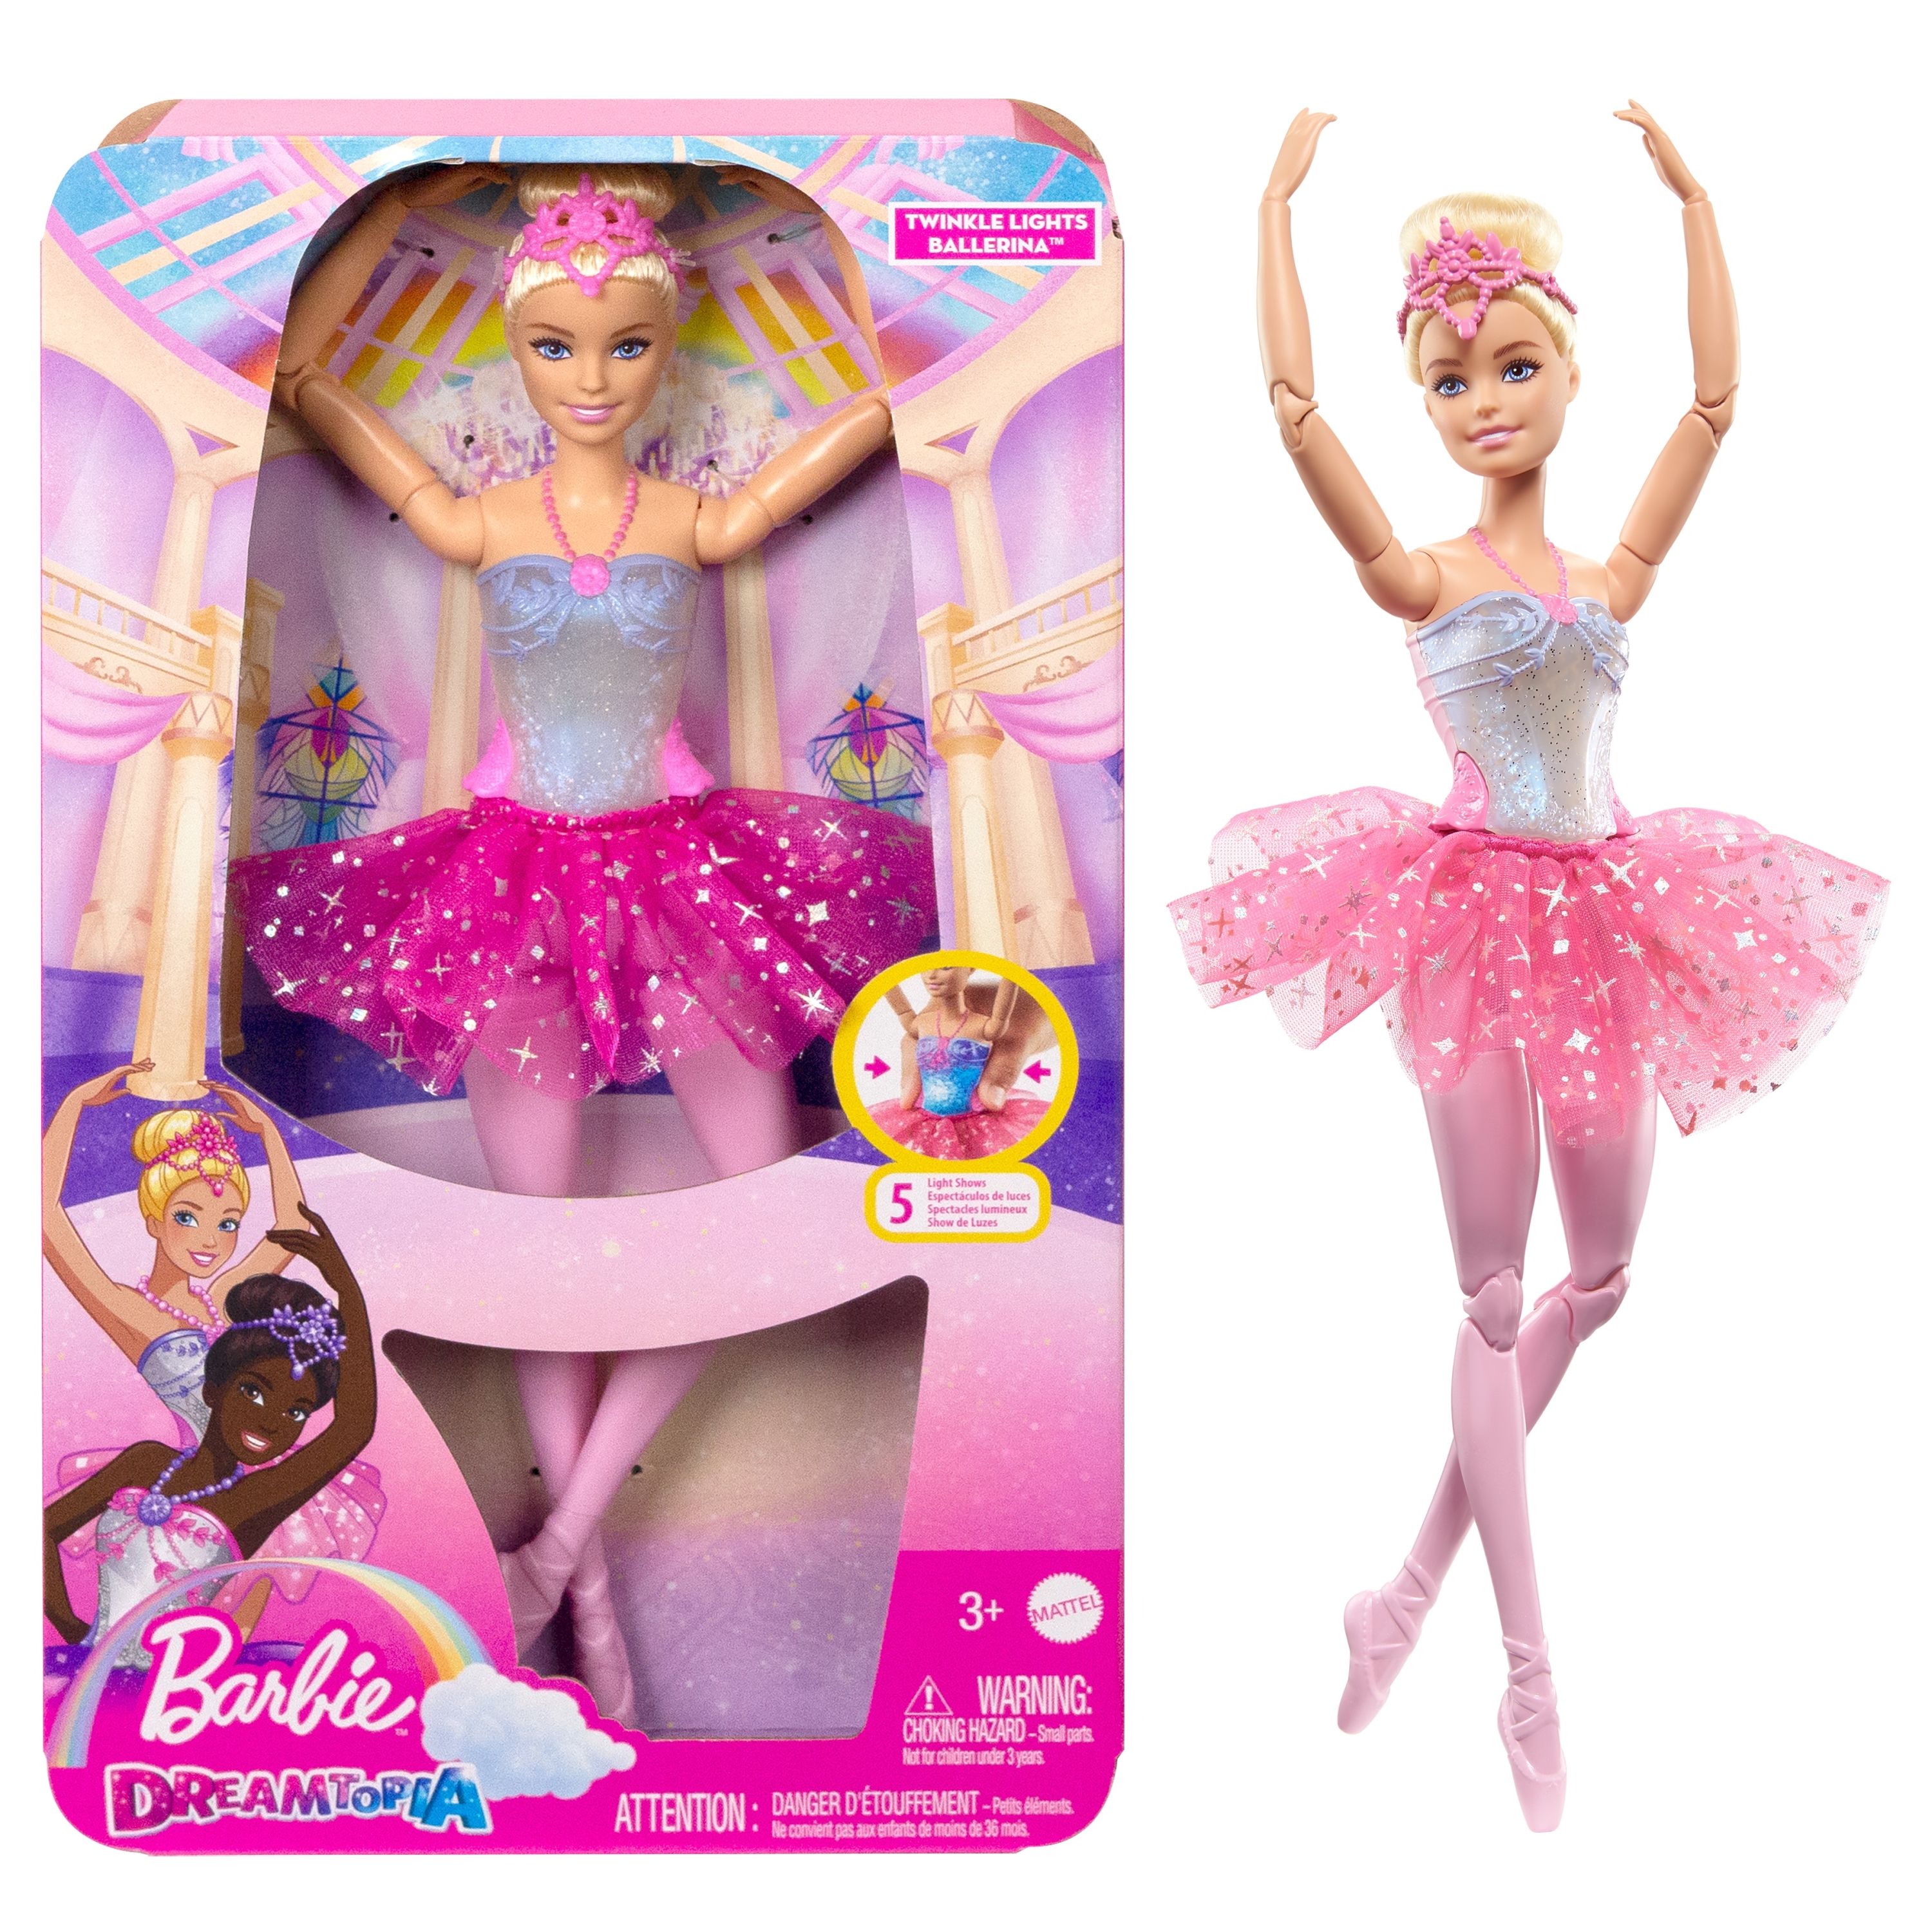 Кукла"Mattel"BarbDr,Балерина,TwinkLights